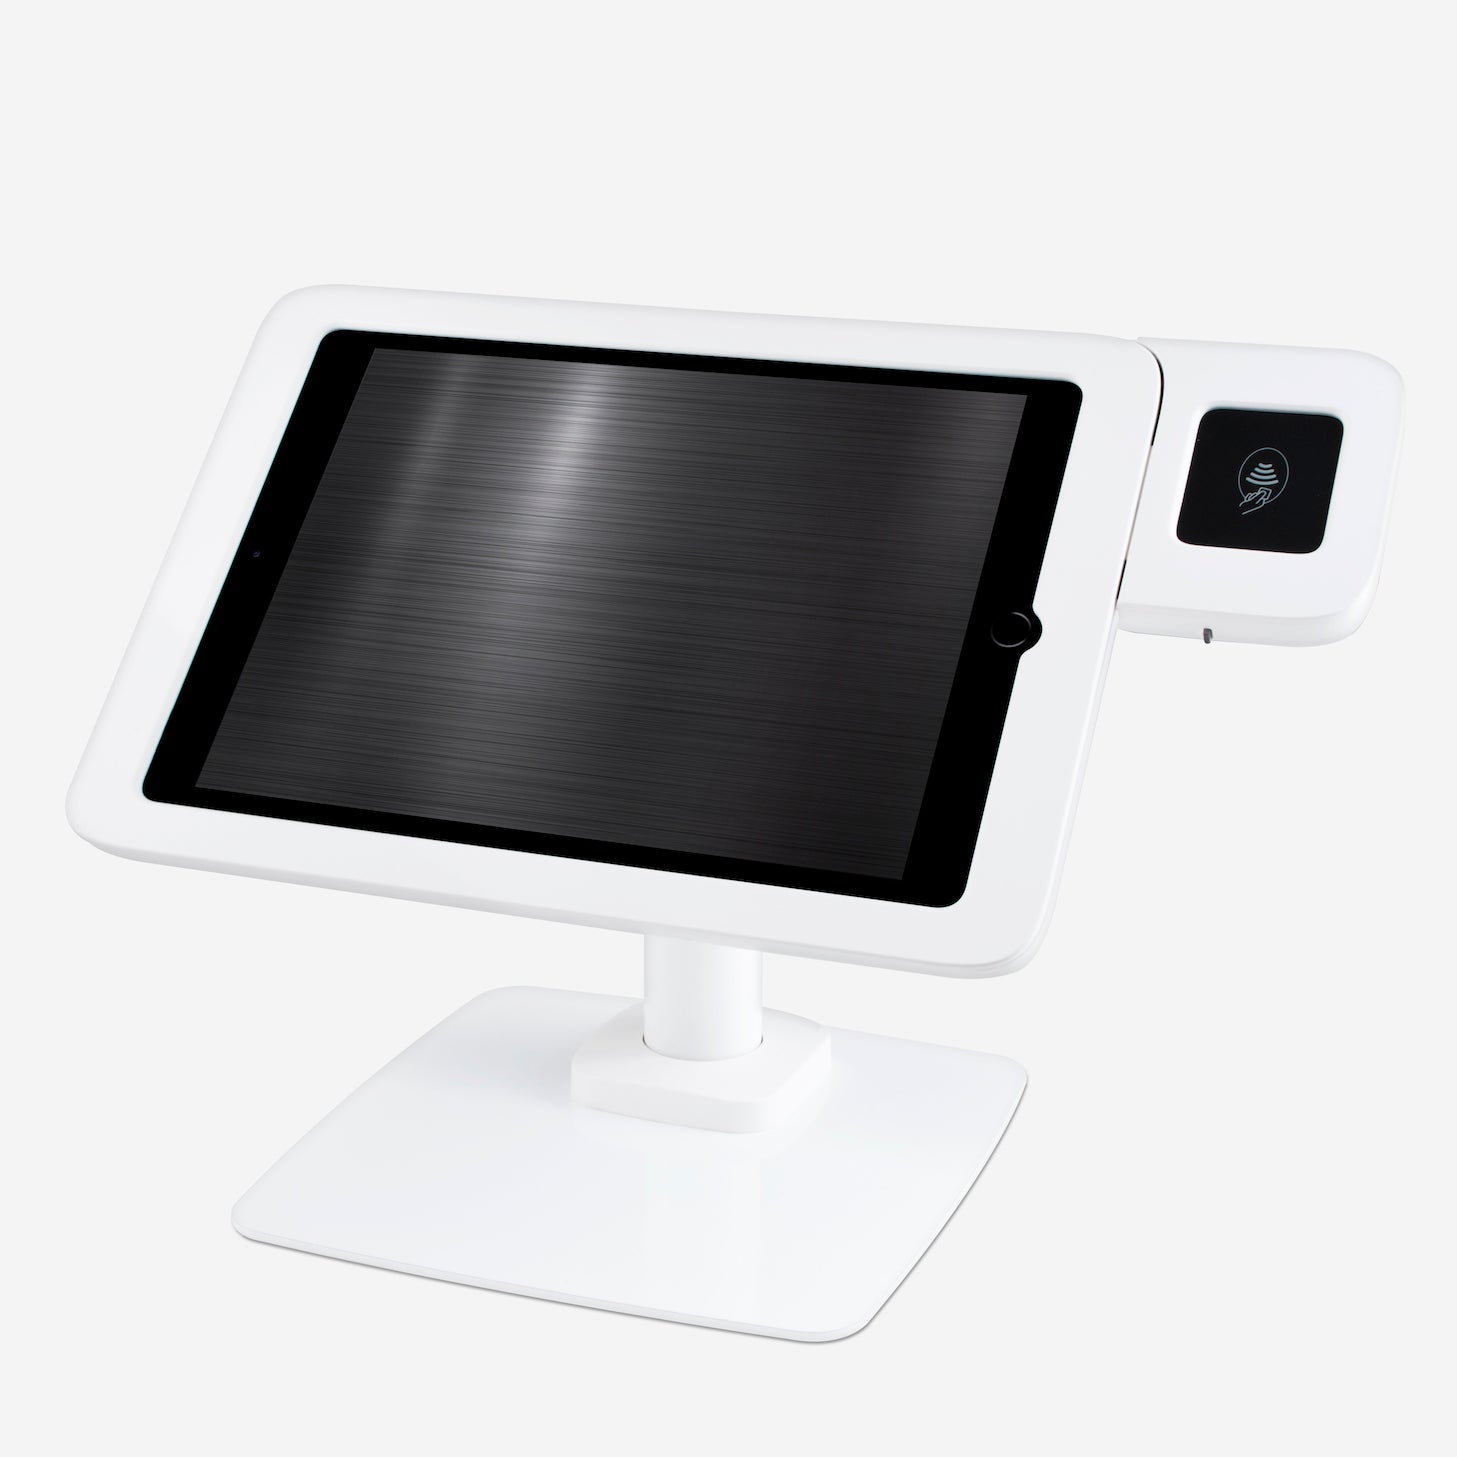 Lilitab tablet kiosks Stripe bbpos powered accessory enclosure